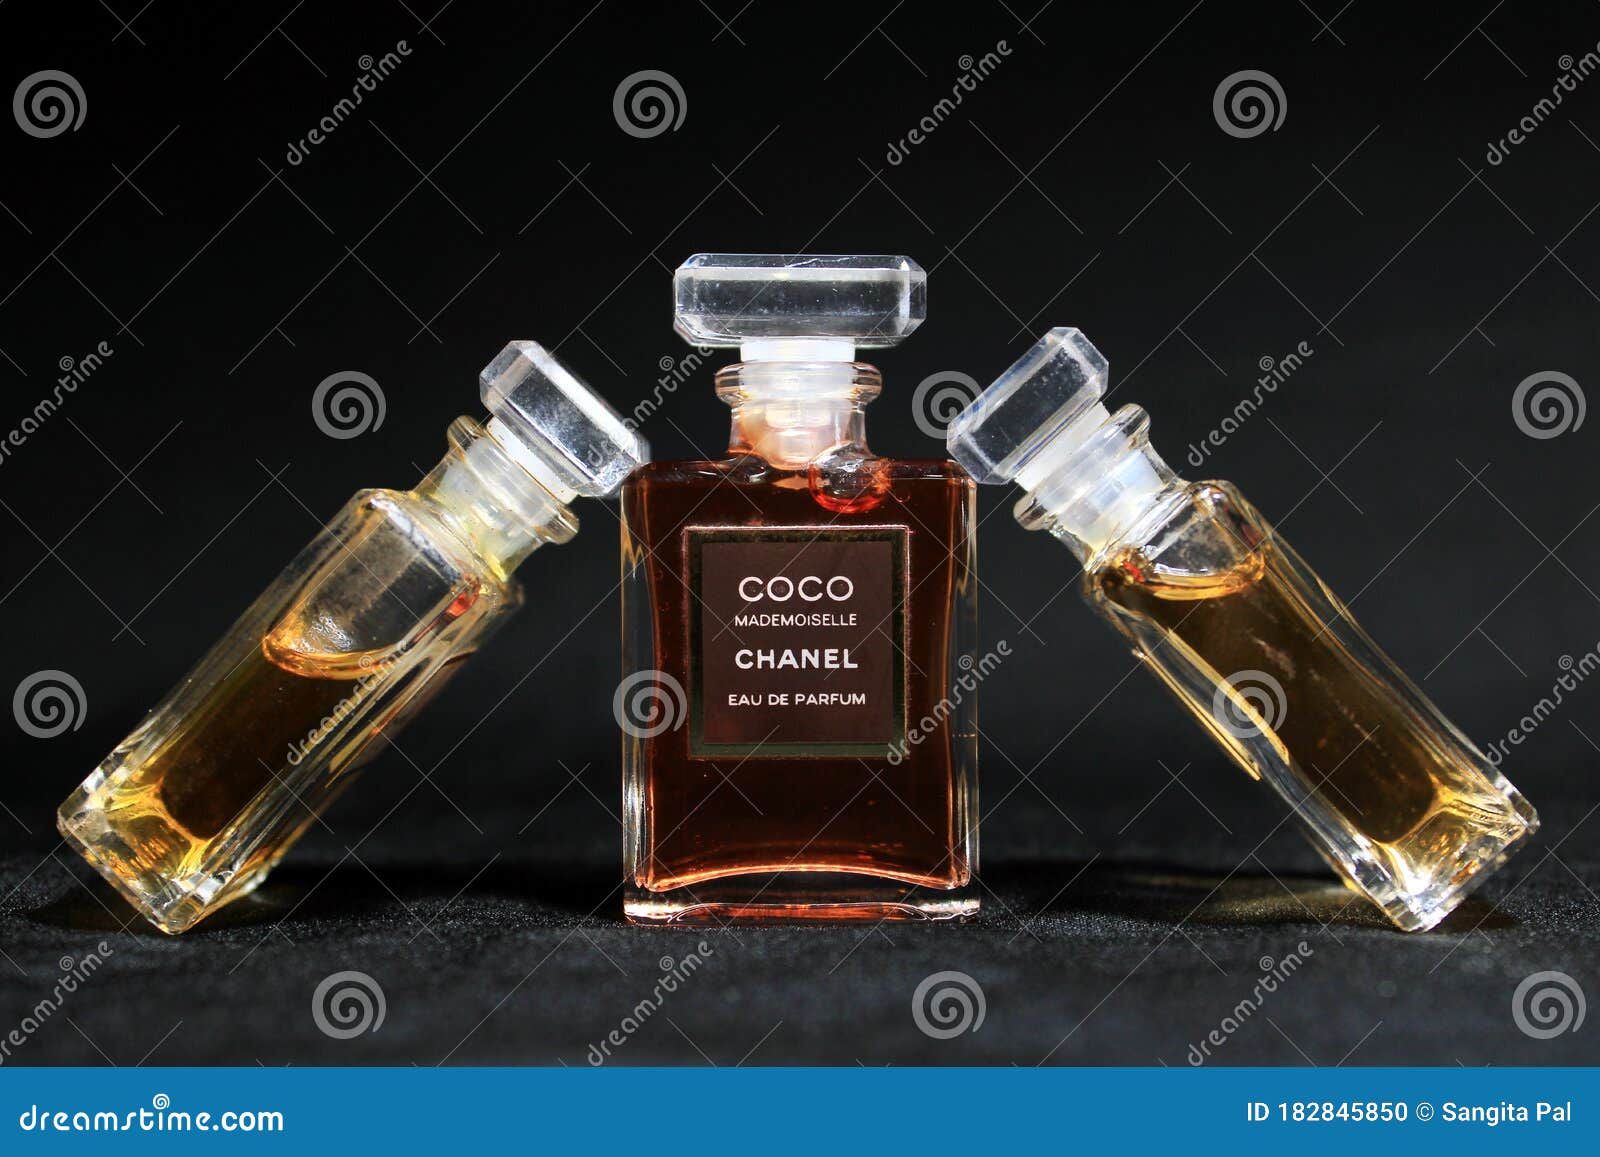 Chanel Perfume Bottles Isolated on Black Background. Bottles with